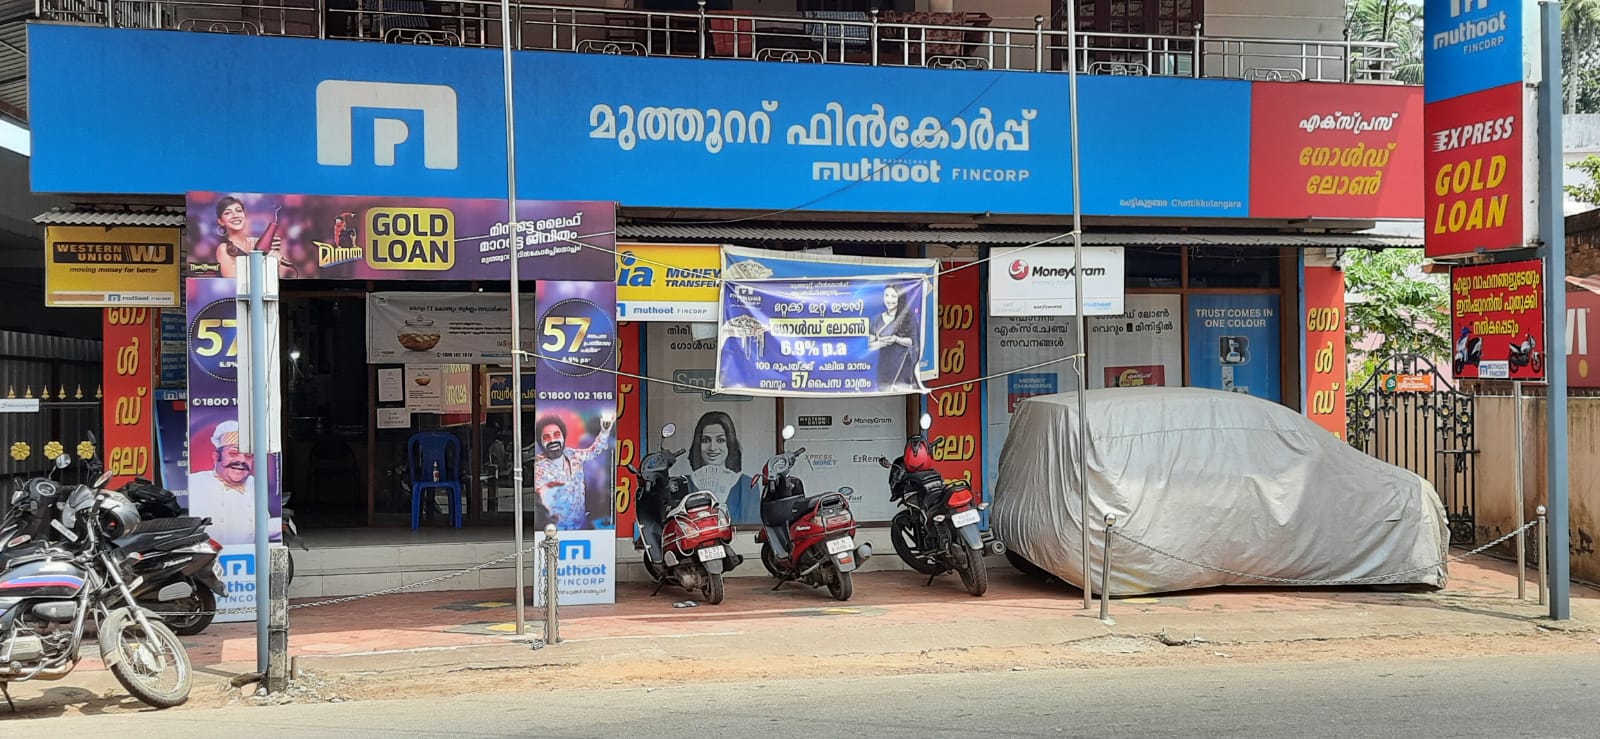 Muthoot Fincorp Gold Loan Services in Mavelikara, Alappuzha, Kerala